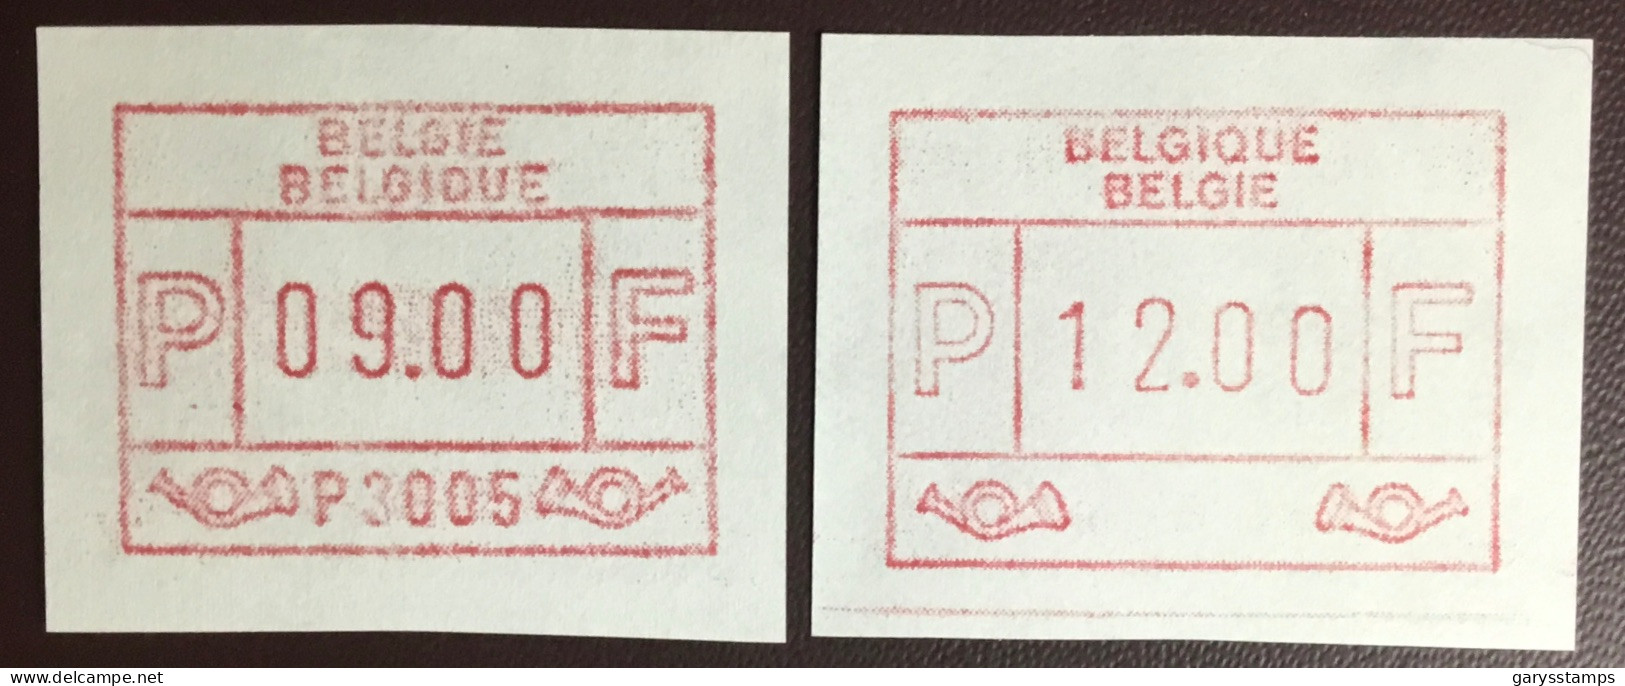 Belgium 1984 ATM Machine Stamps MNH - Postfris